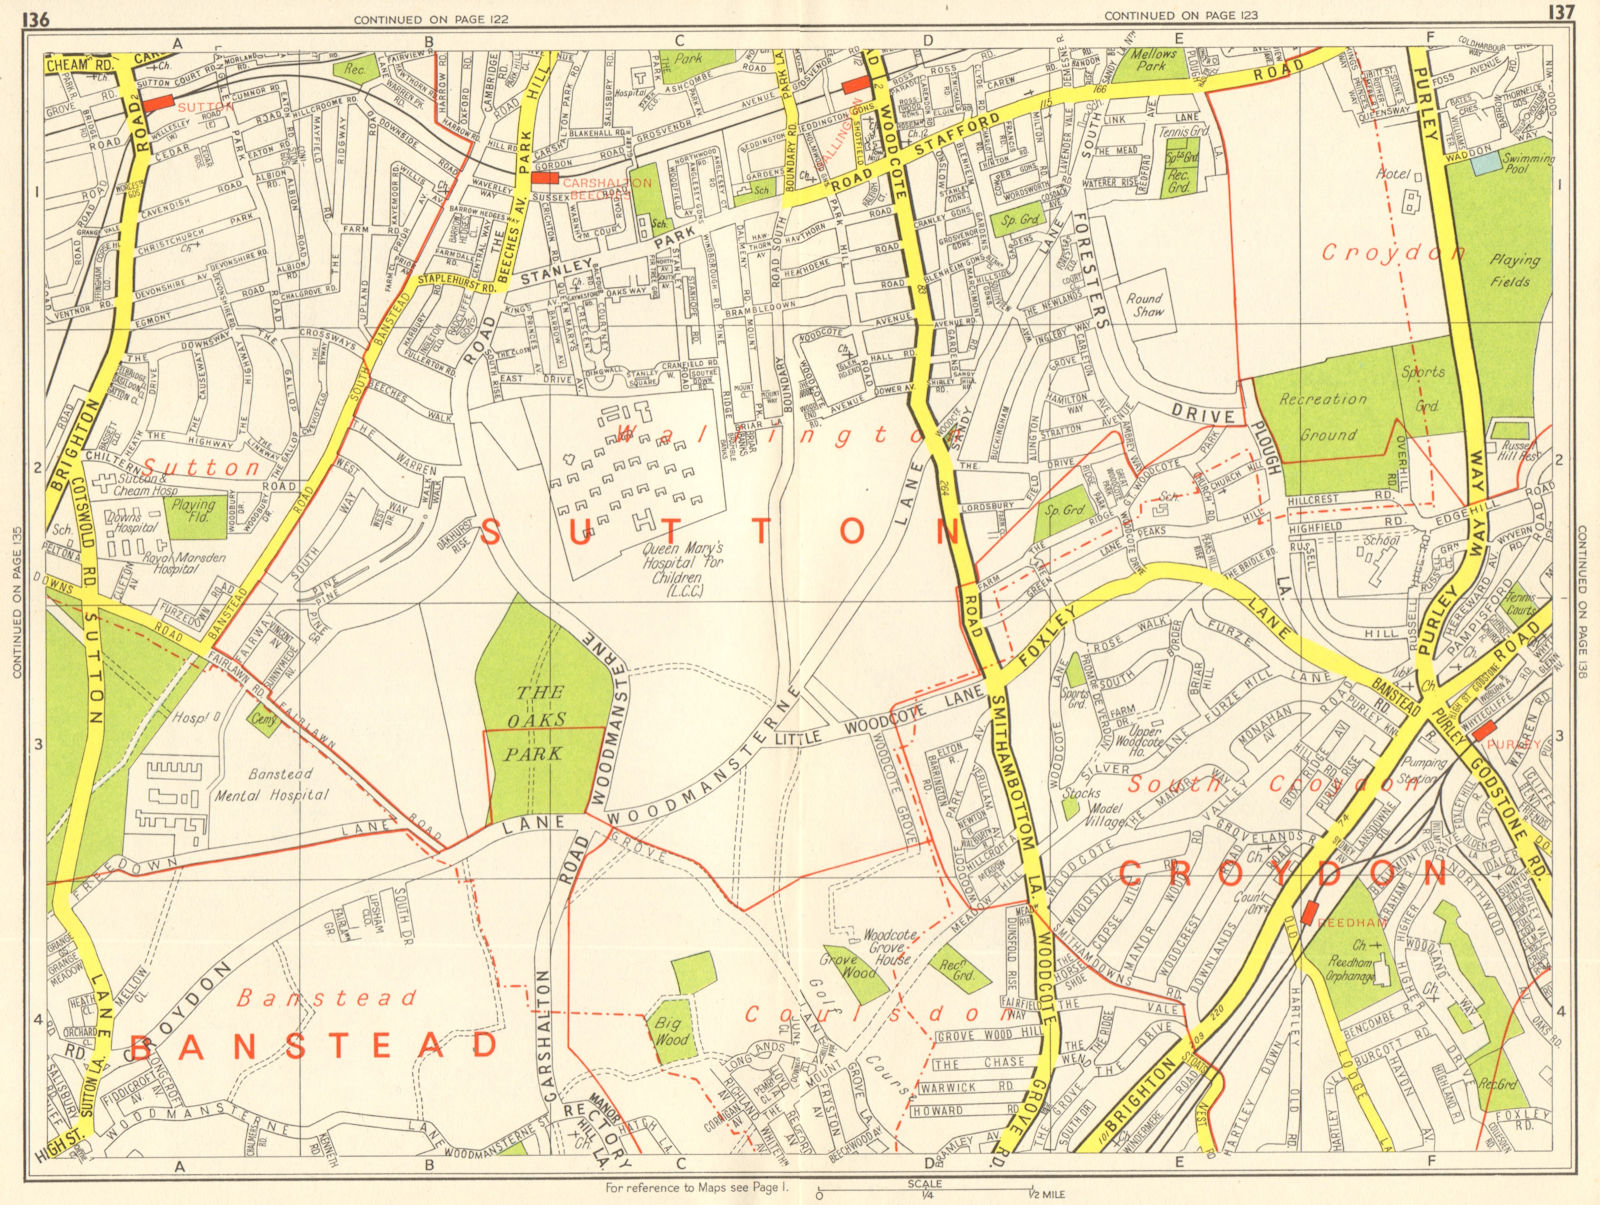 PURLEY WALLINGTON Carshalton Coulsdon Croydon Airport. GEOGRAPHERS' A-Z 1964 map